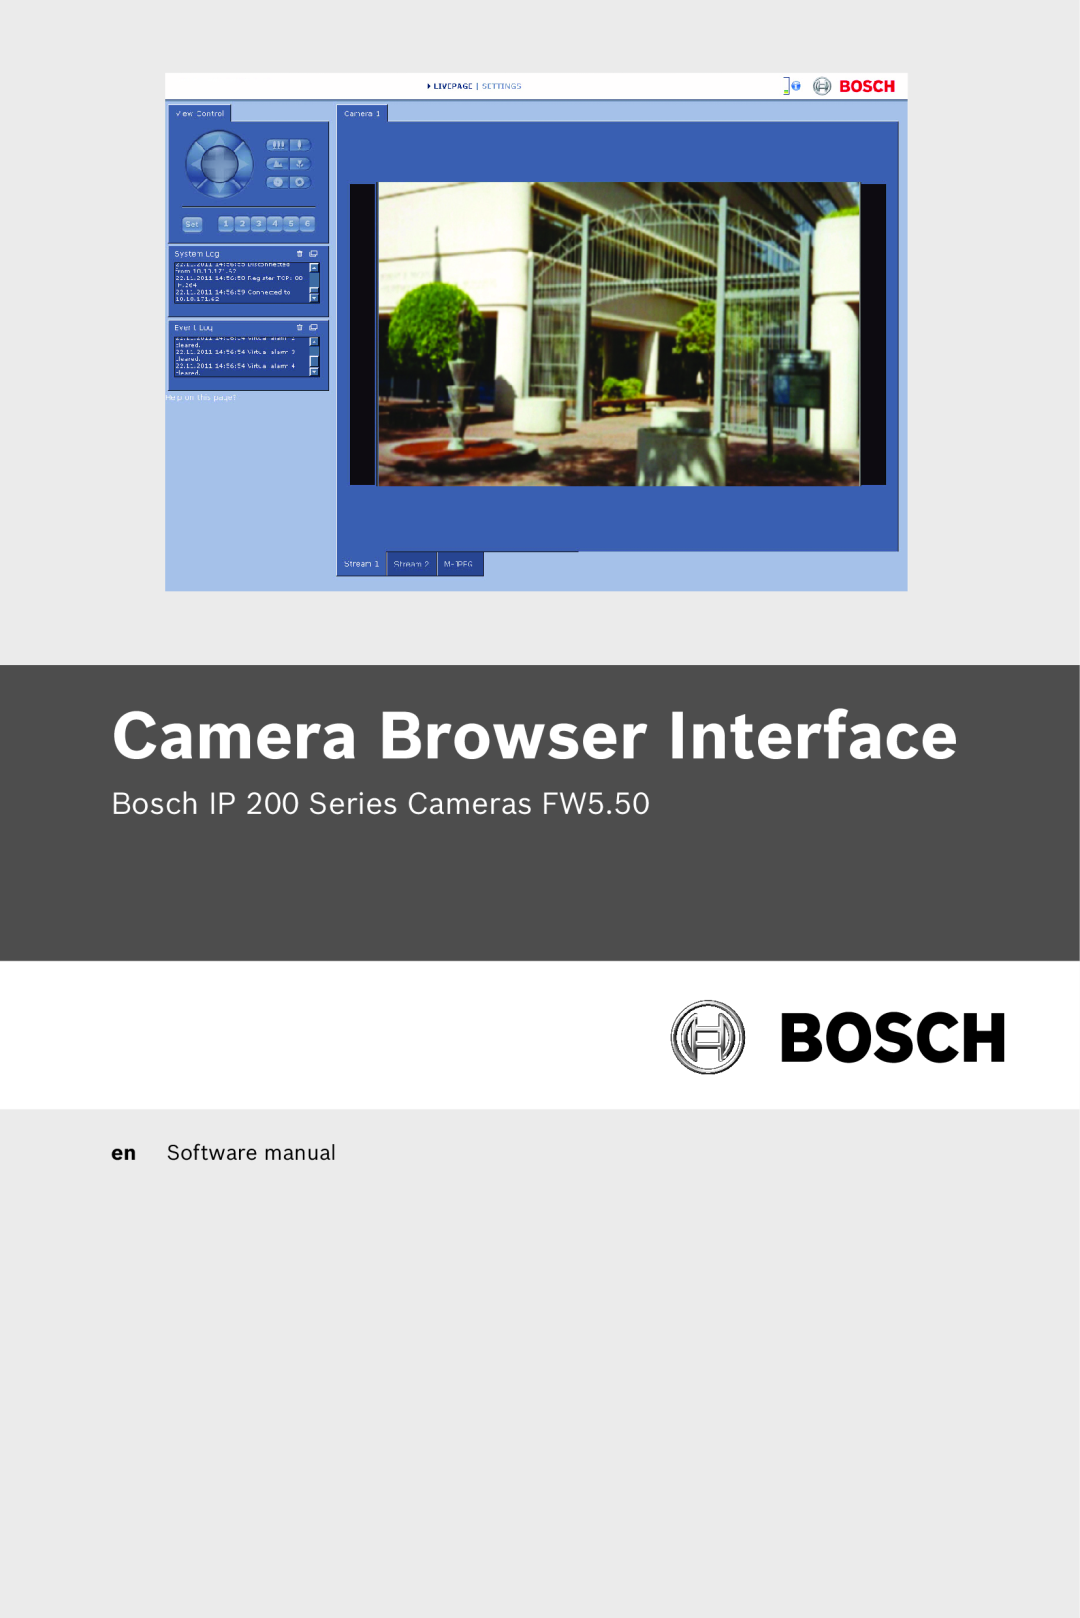 Bosch Appliances software manual Camera Browser Interface, Bosch IP 200 Series Cameras FW5.50, en Software manual 